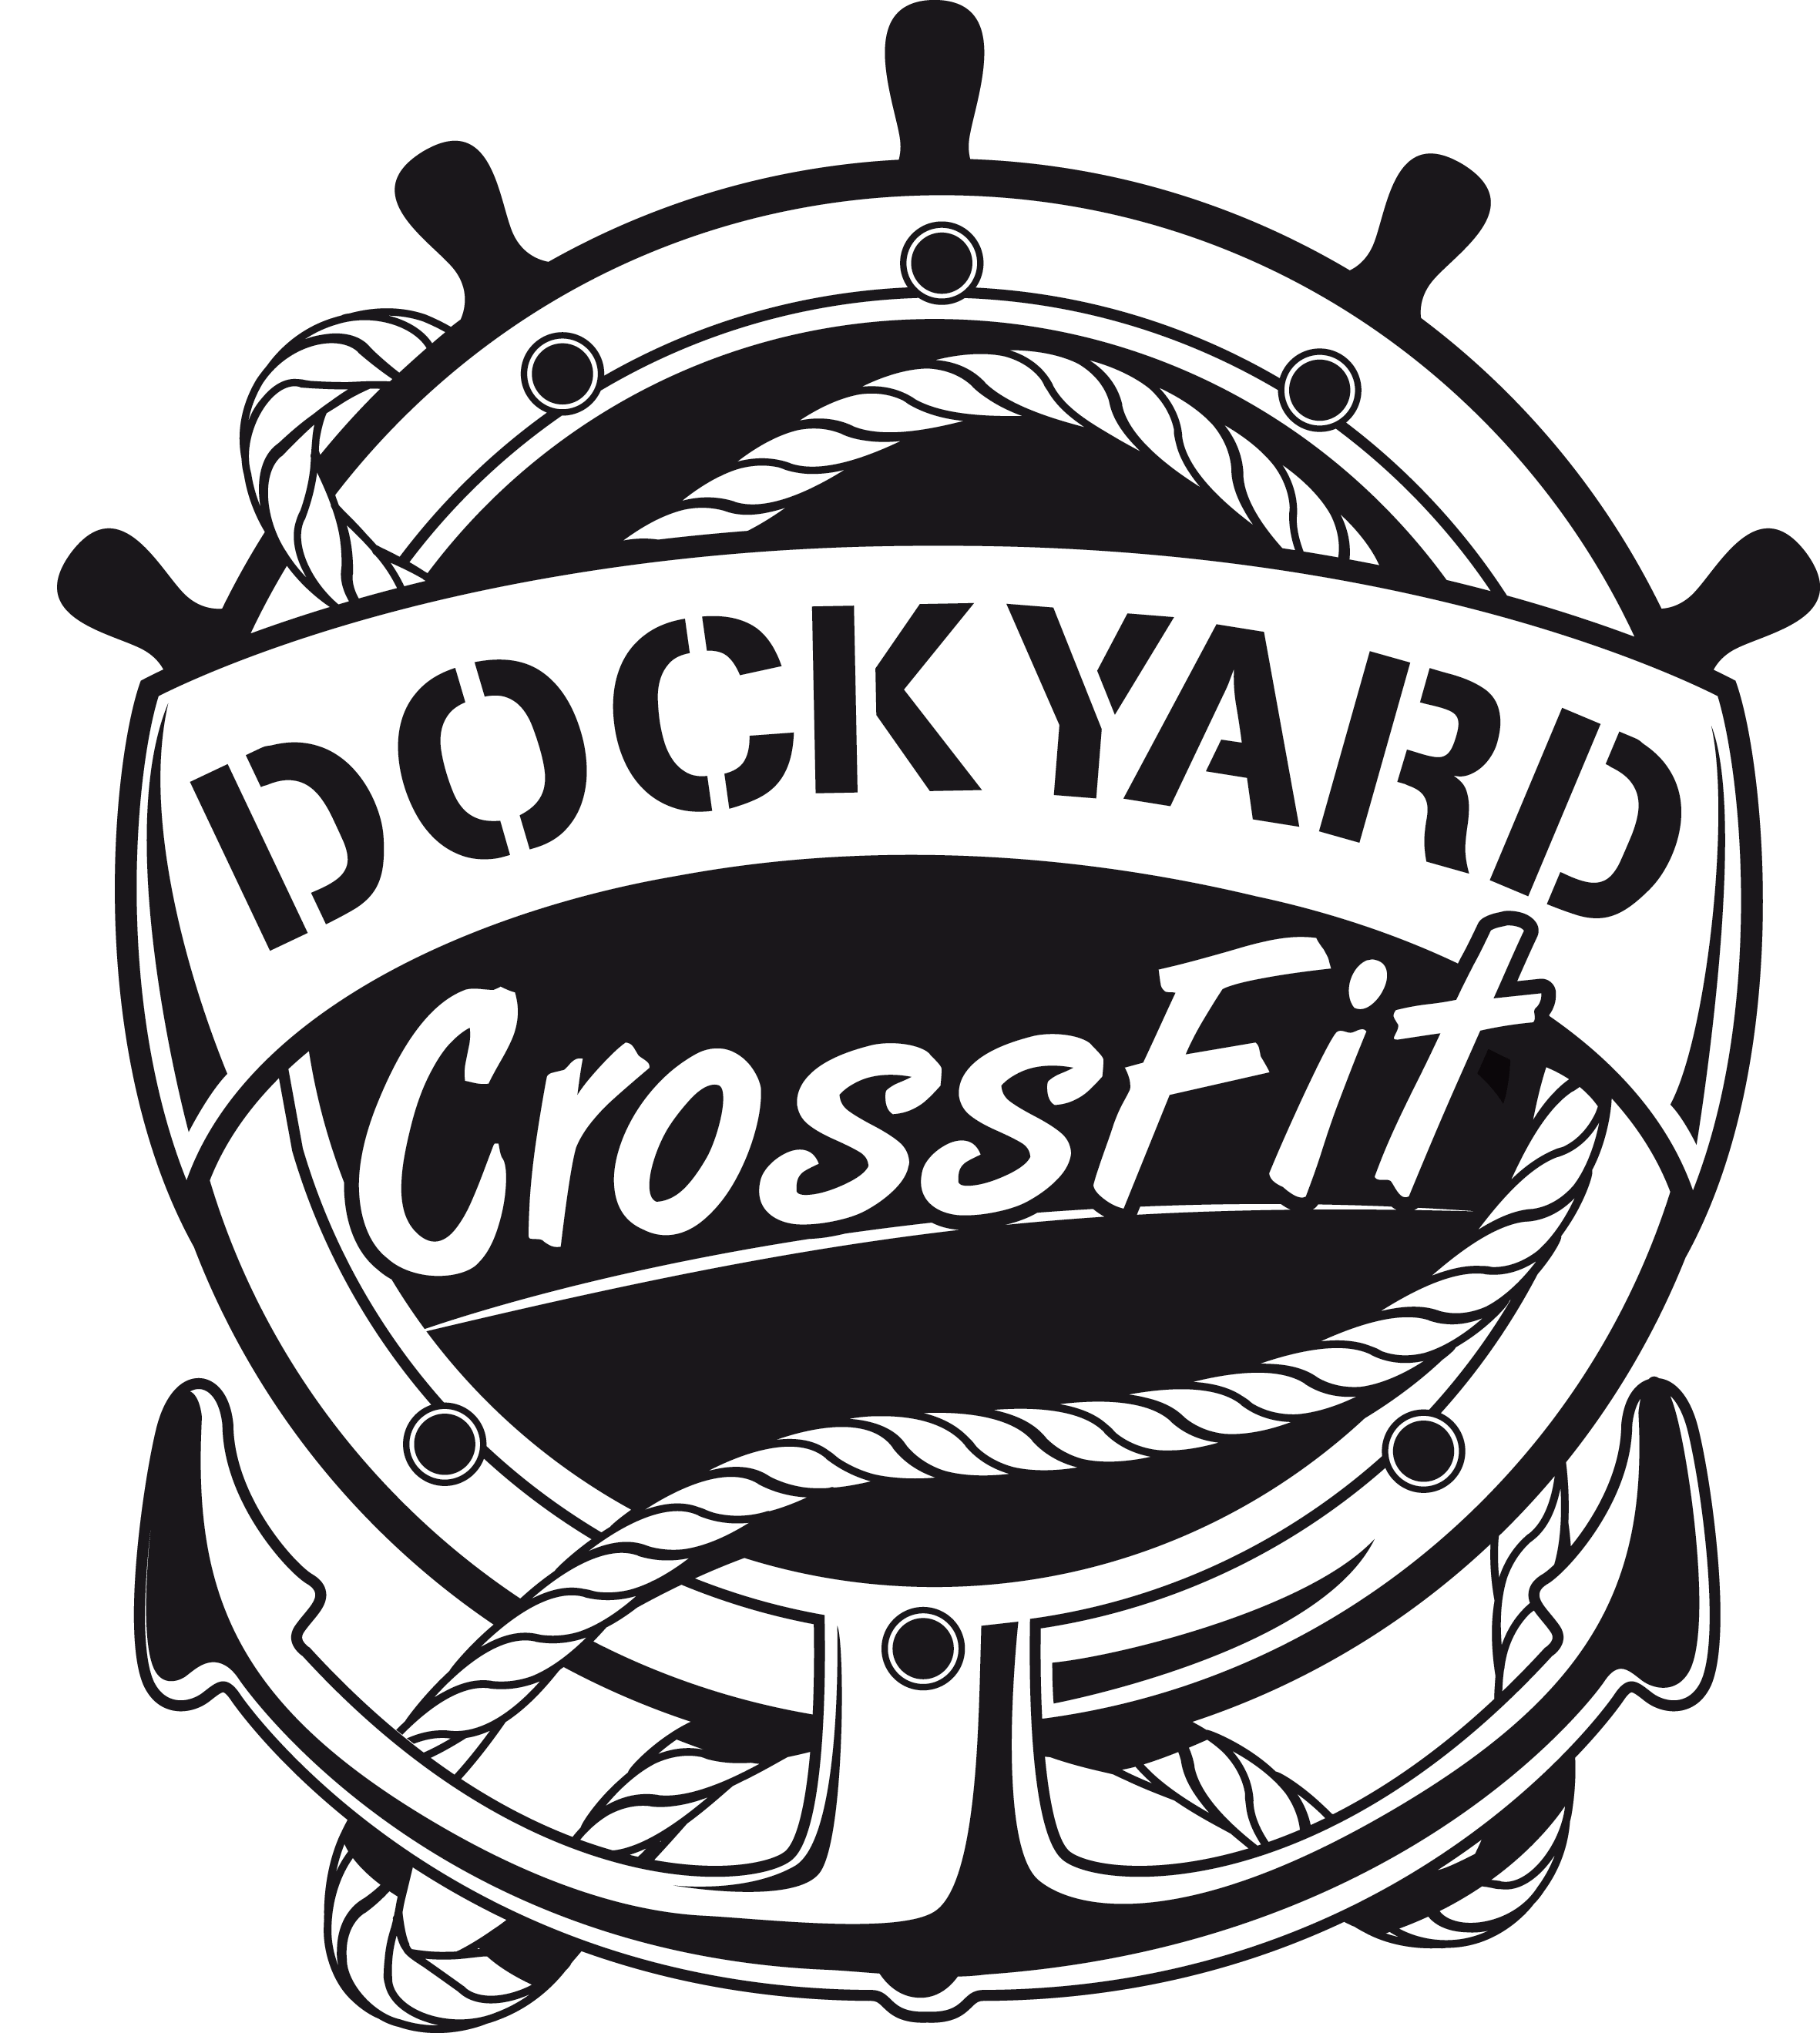 Logo Dockyard CrossFit